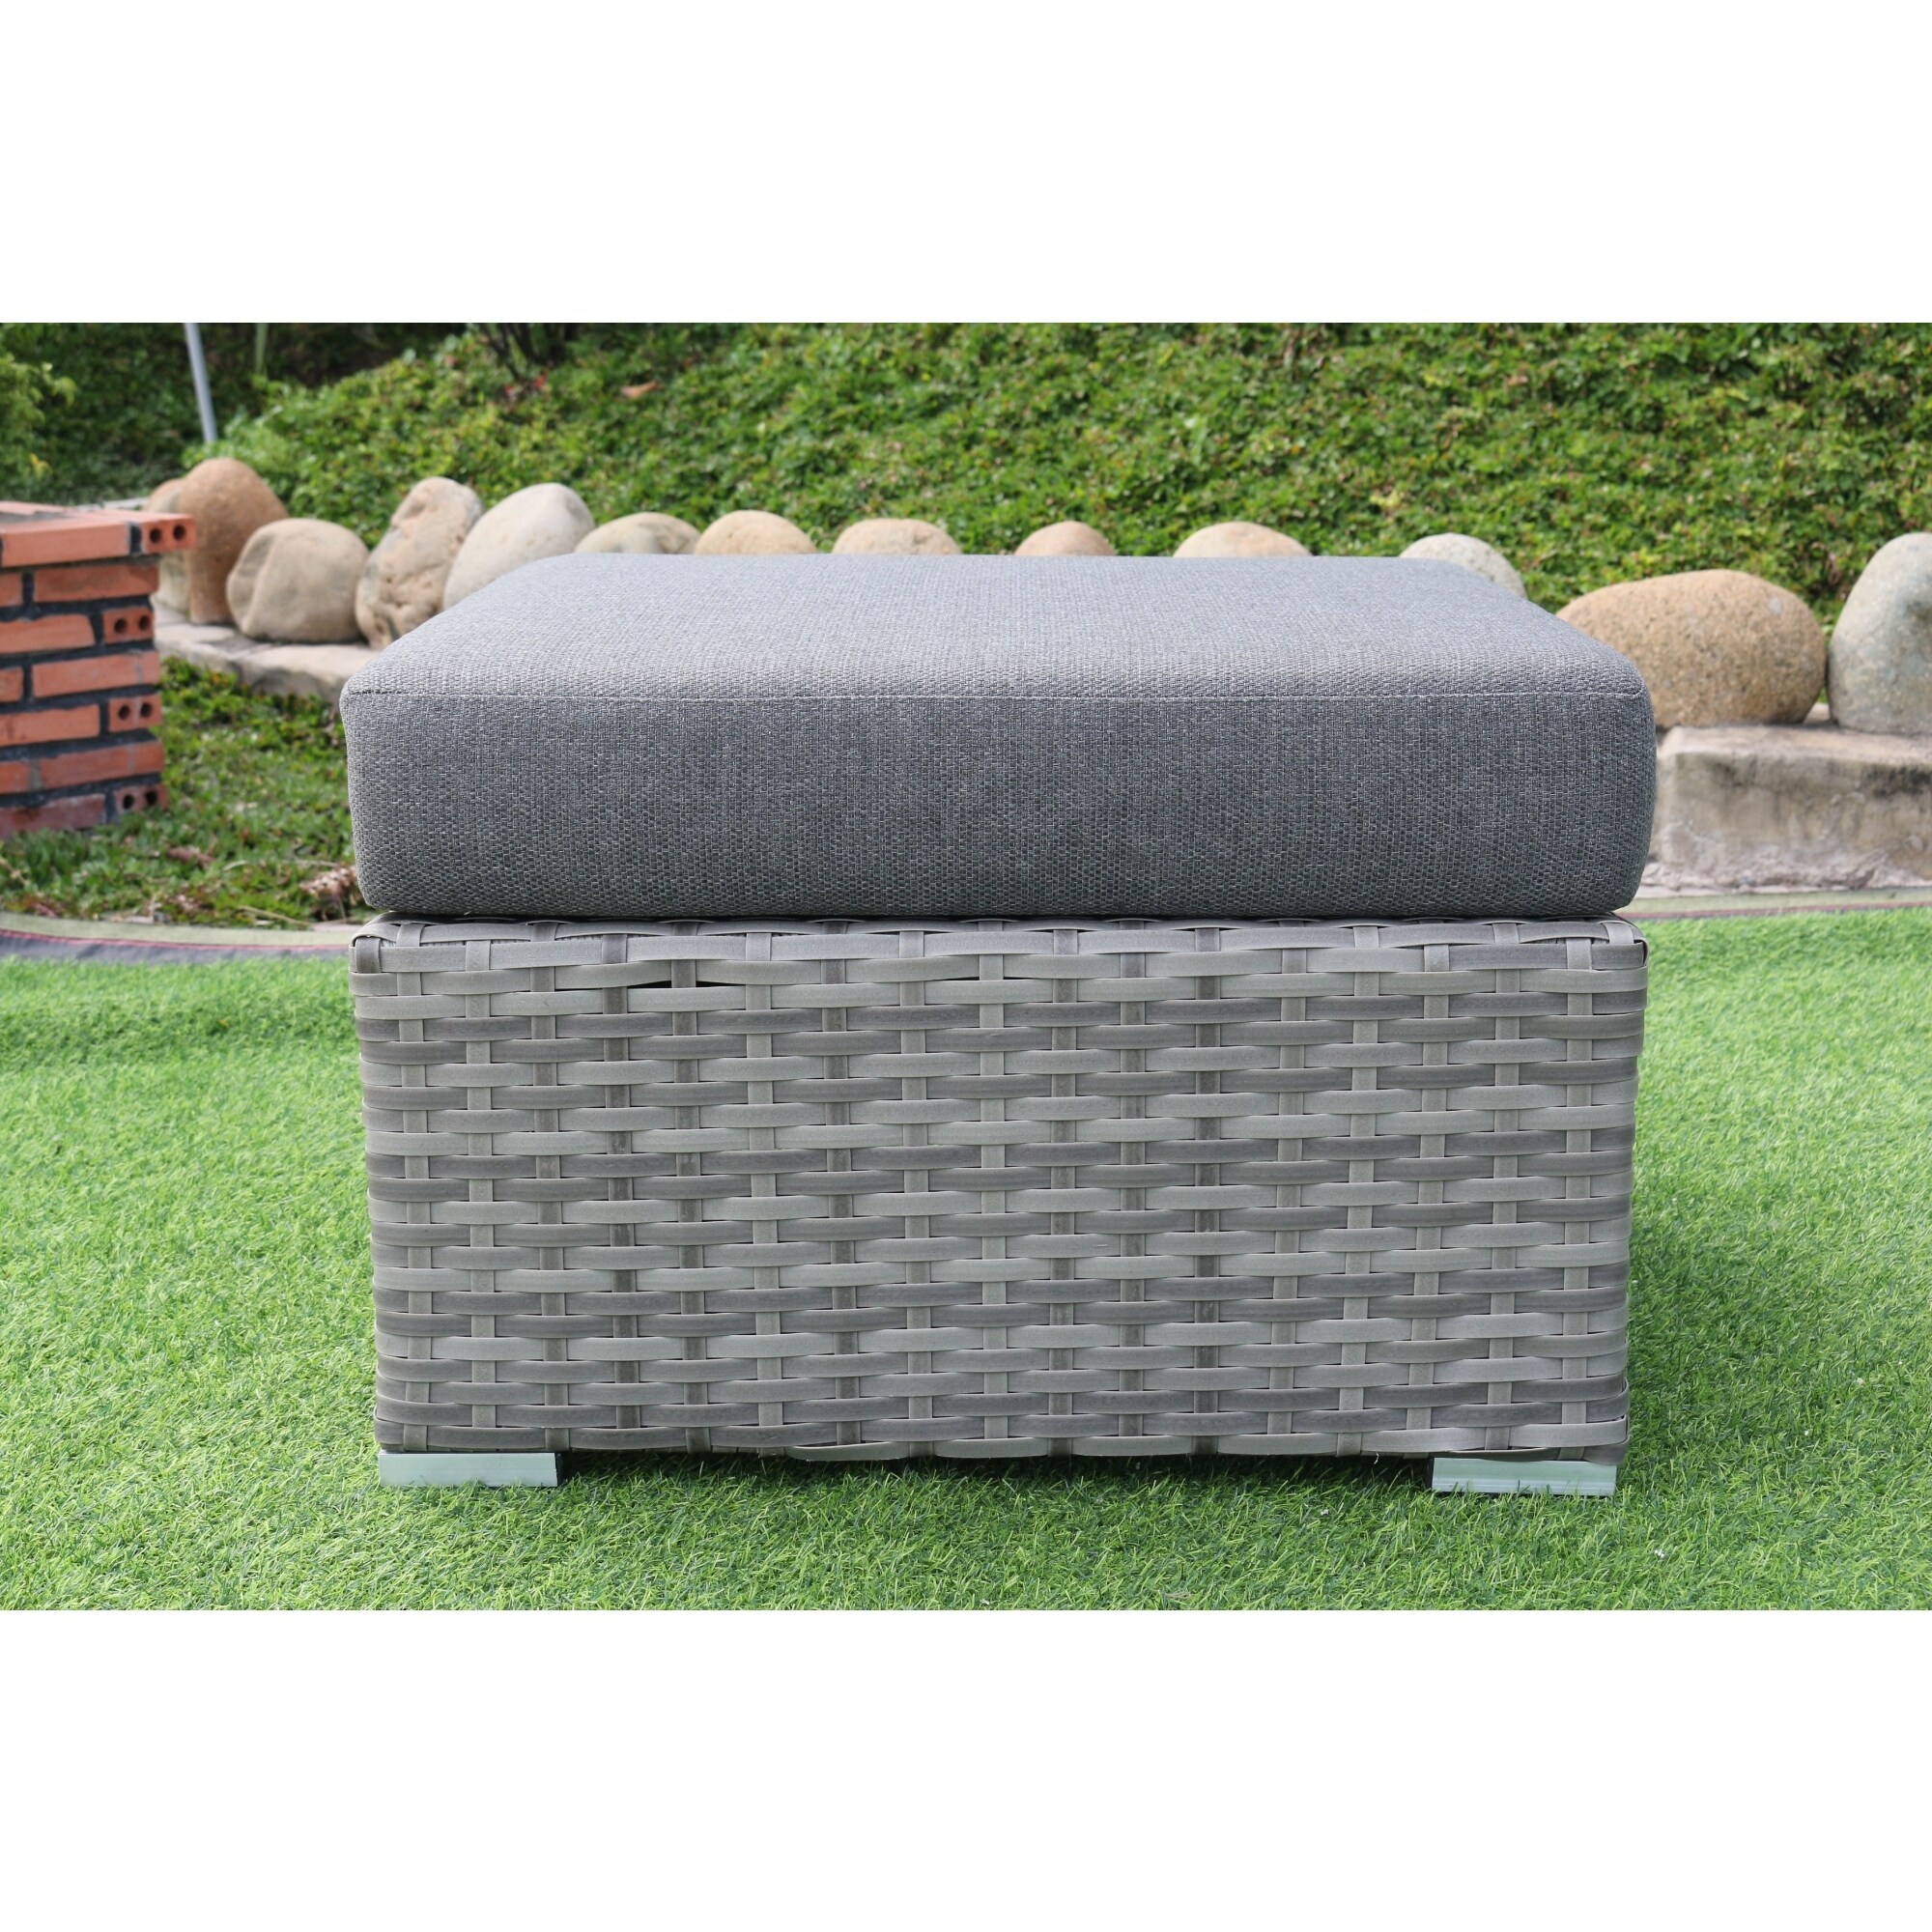 Miami Wicker Outdoor Storage Ottoman With Olefin Cushions - Grey